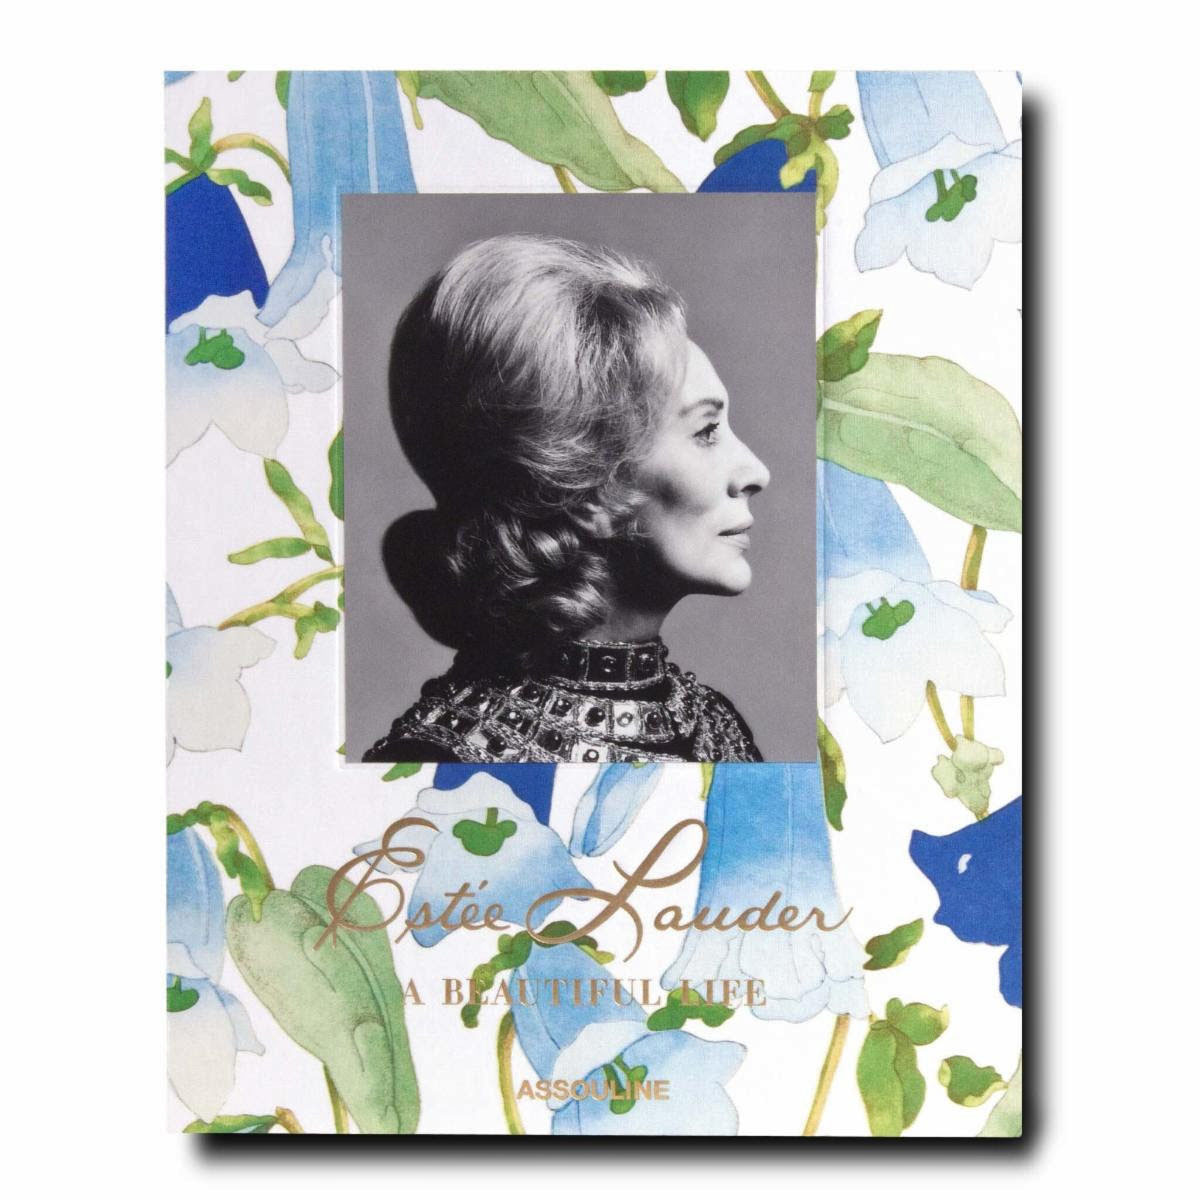 Estee Lauder: A Beautiful Life book cover